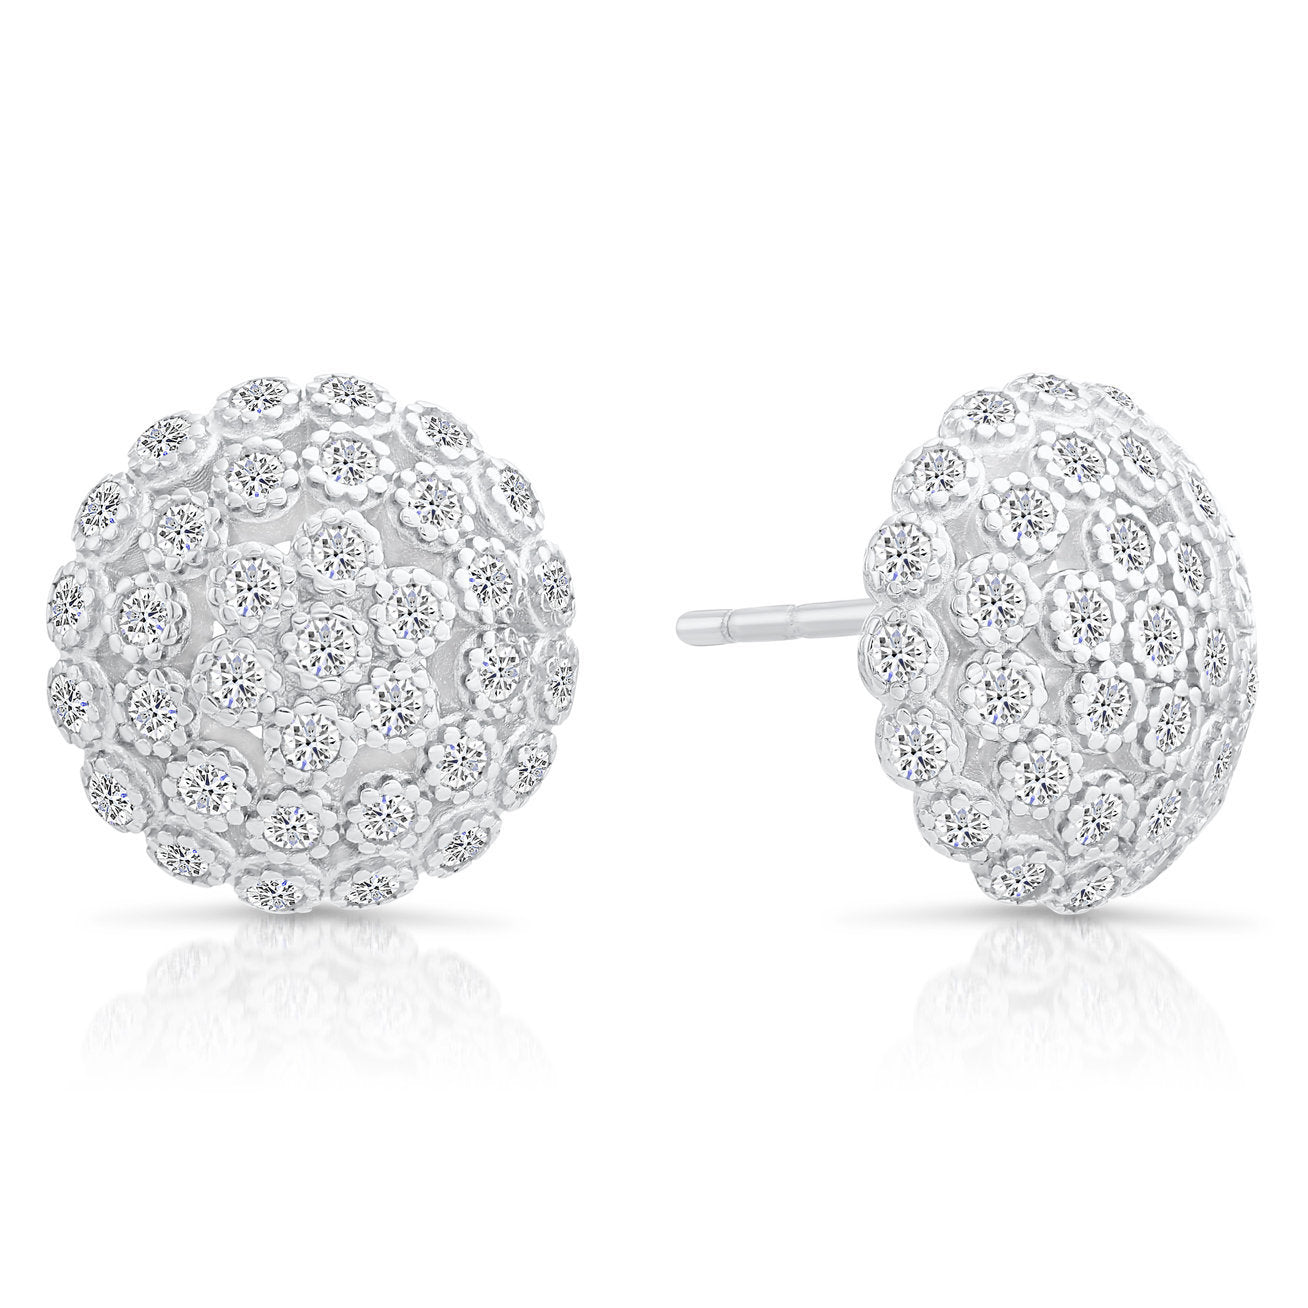 CZ Large Flower Round Stud Earrings in Sterling Silver